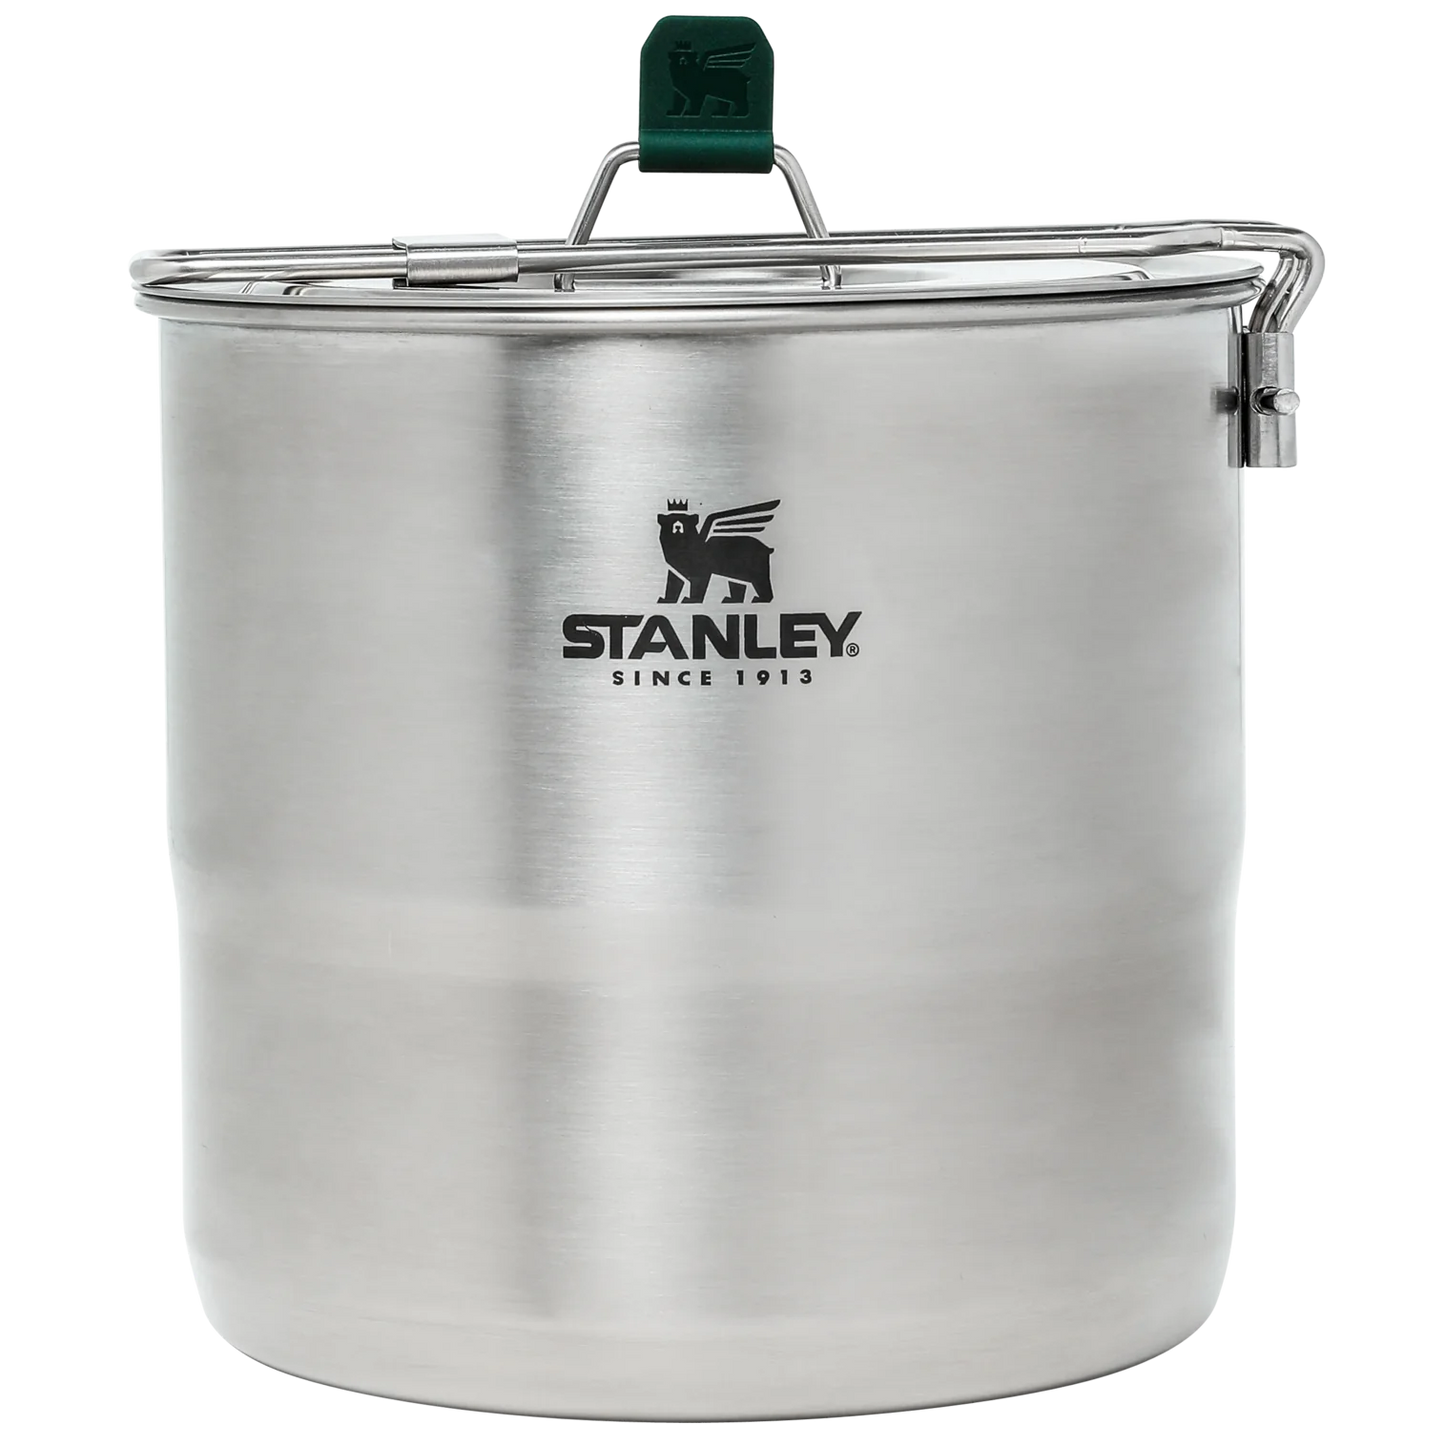 Stanley Adventure Stainless Steel Cook Set 10-10651